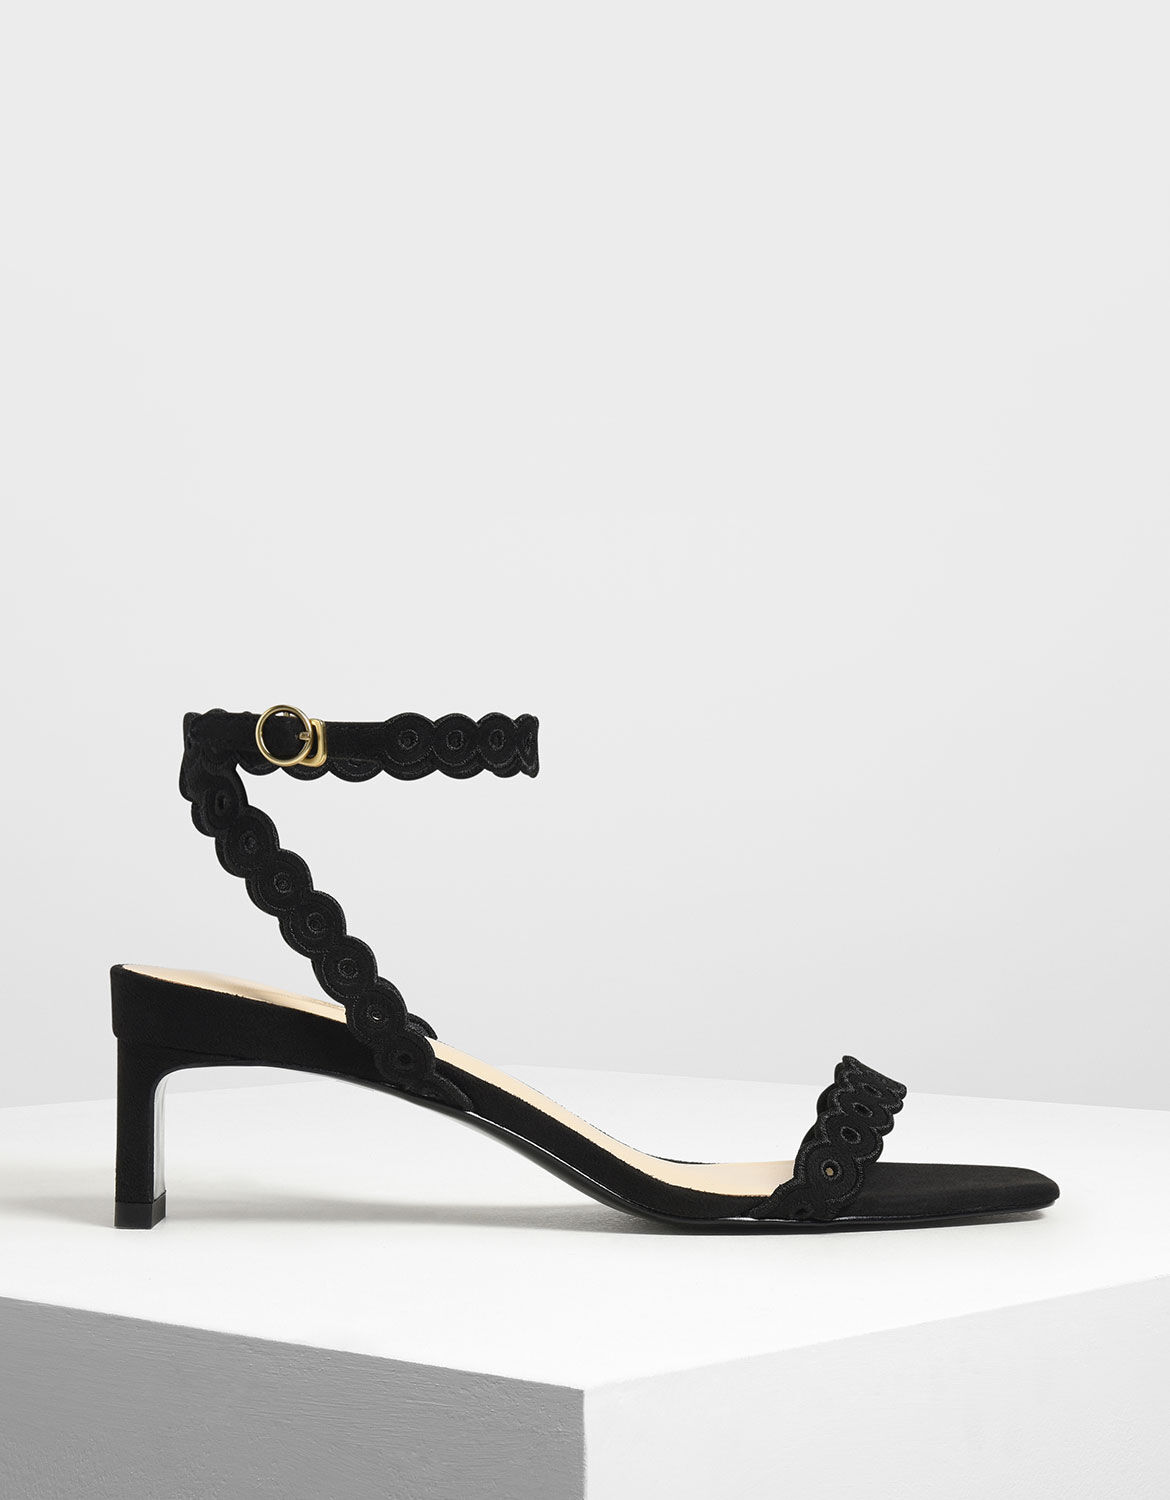 black ankle strap heels